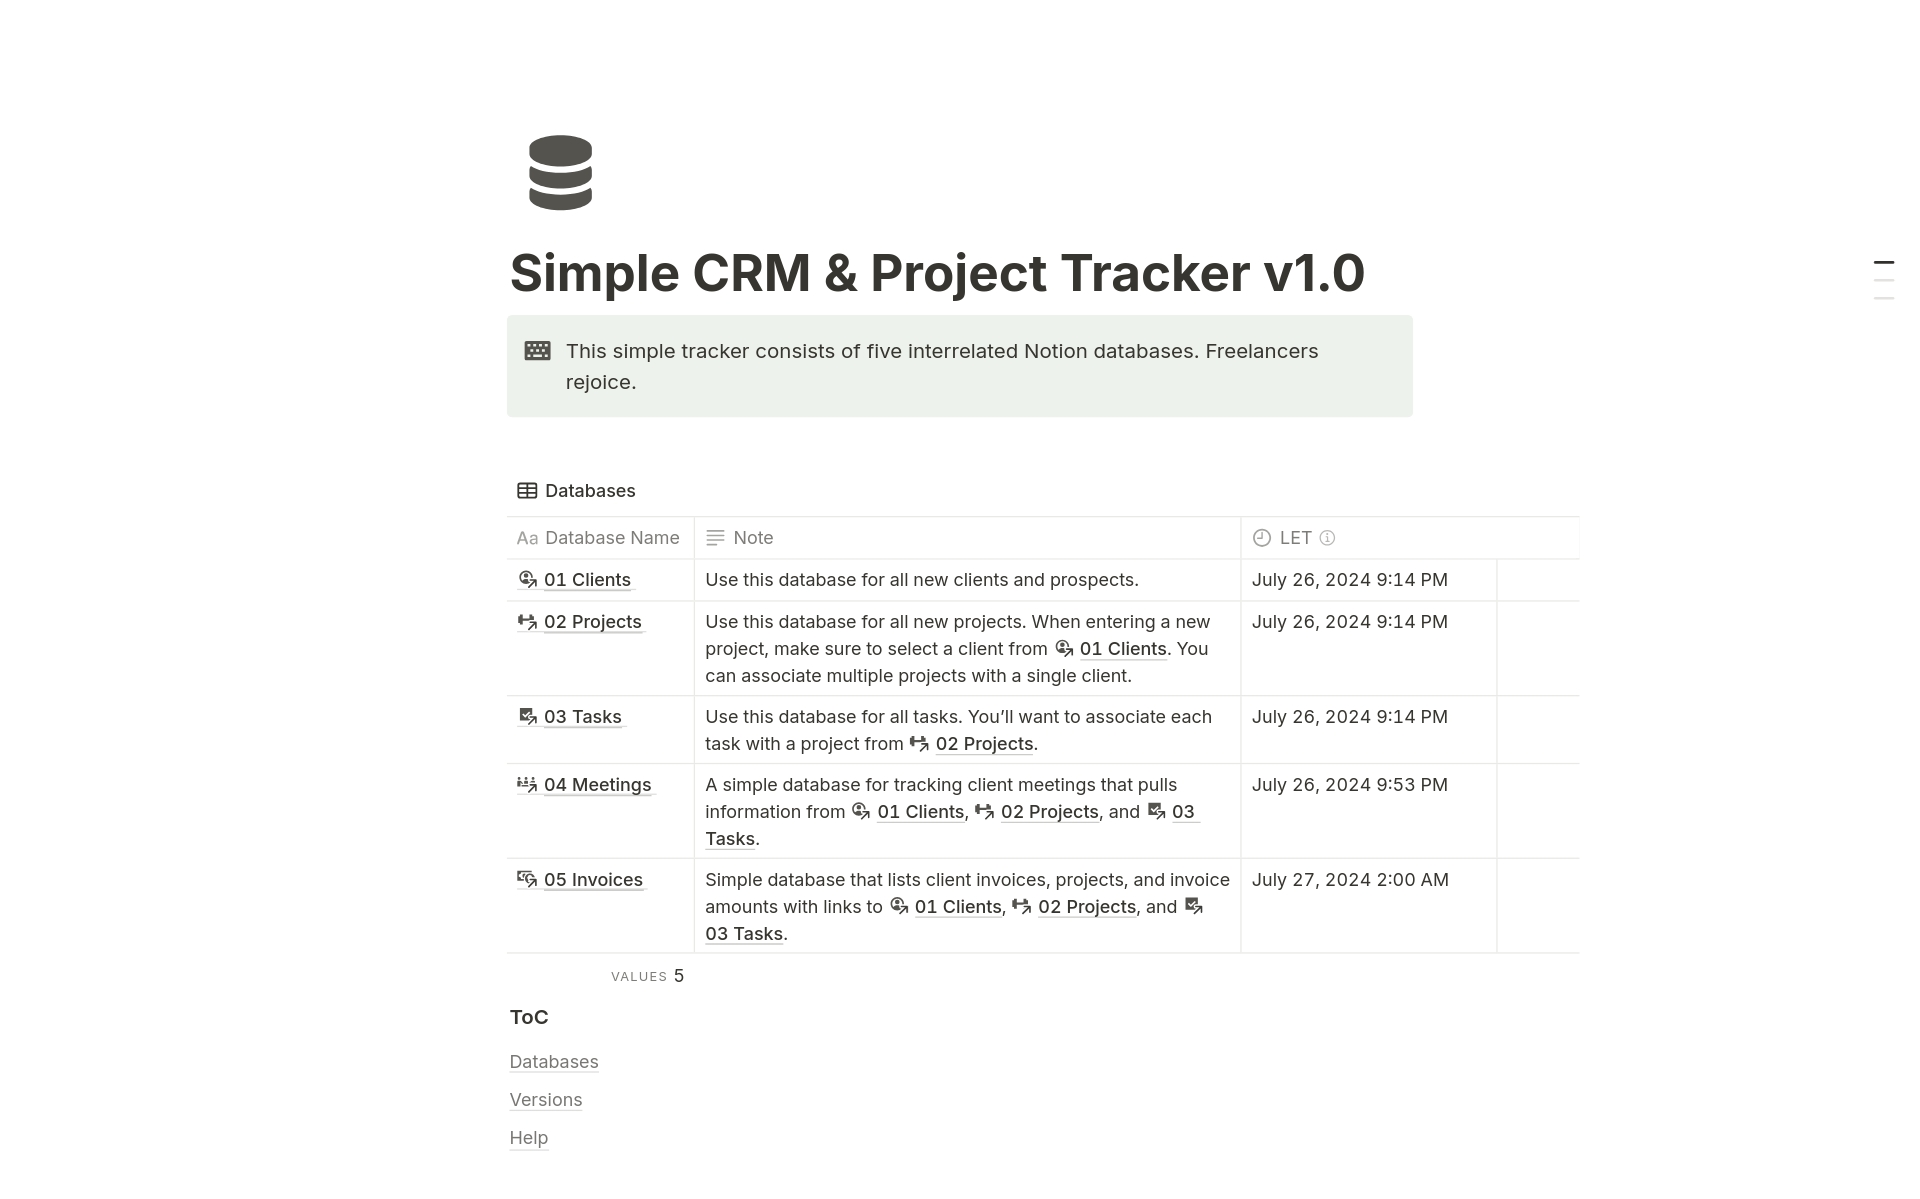 Vista previa de plantilla para Simple CRM & Project Tracker